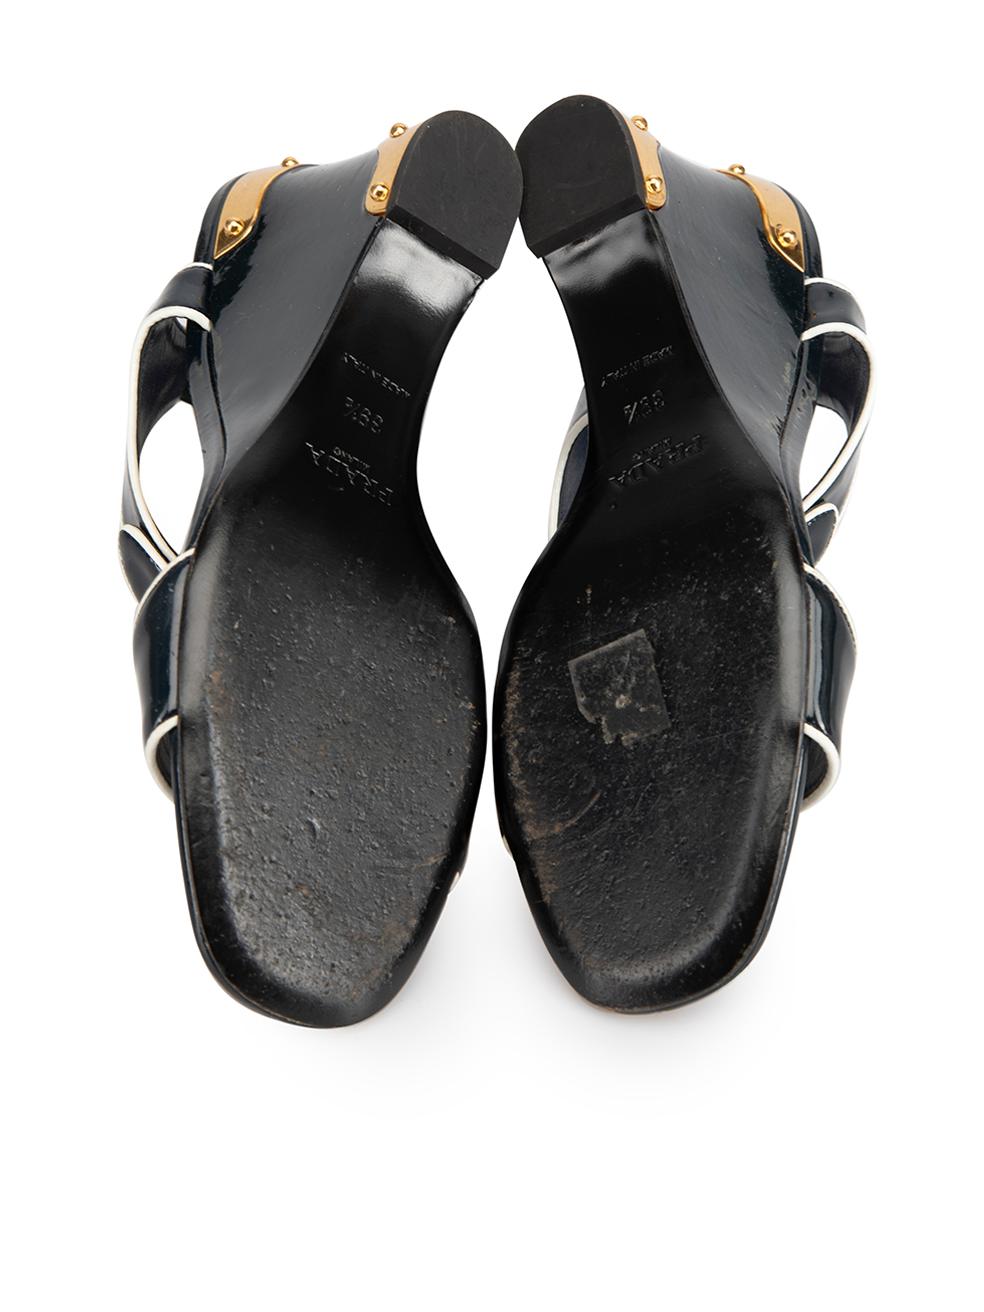 Prada Women's Black Patent Leather Stud Wedge Sandals 2